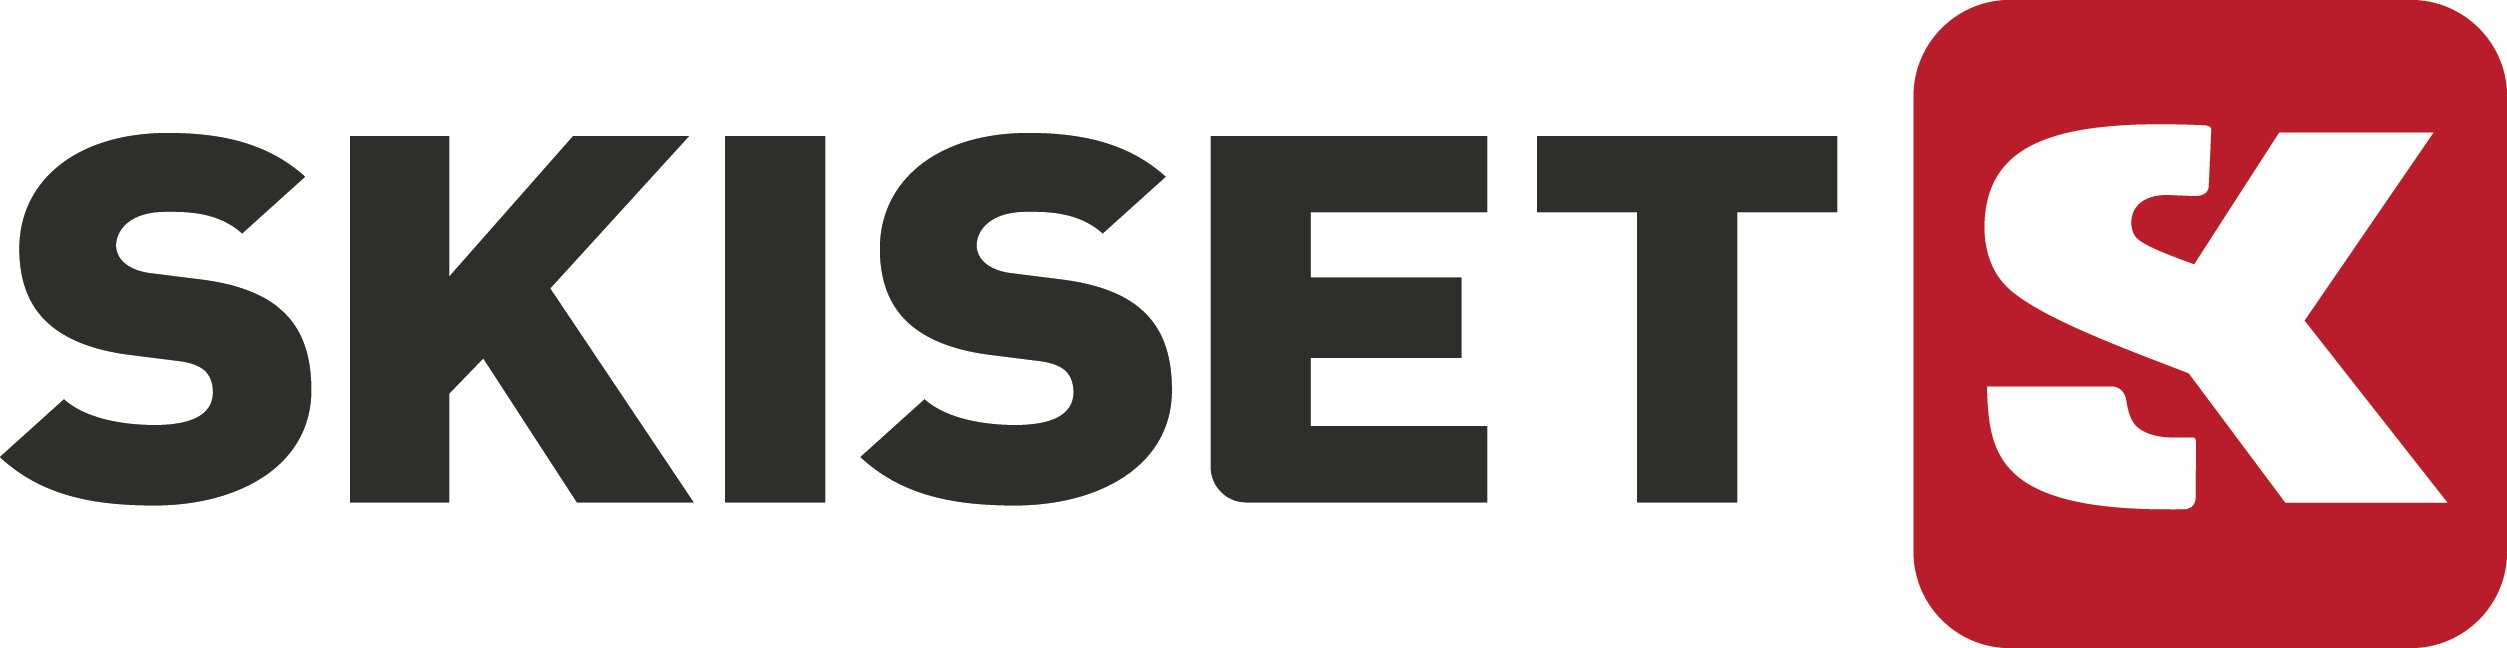 skiset_logo